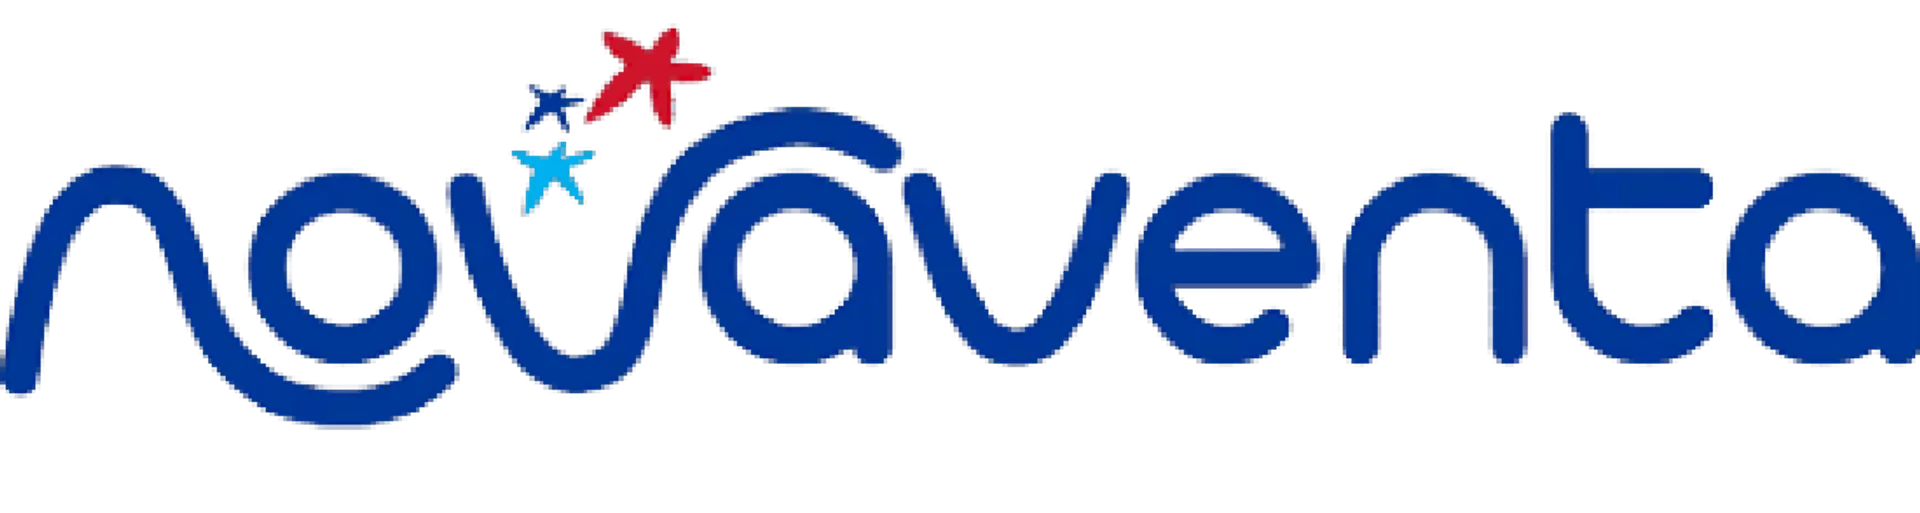 NOVAVENTA logo